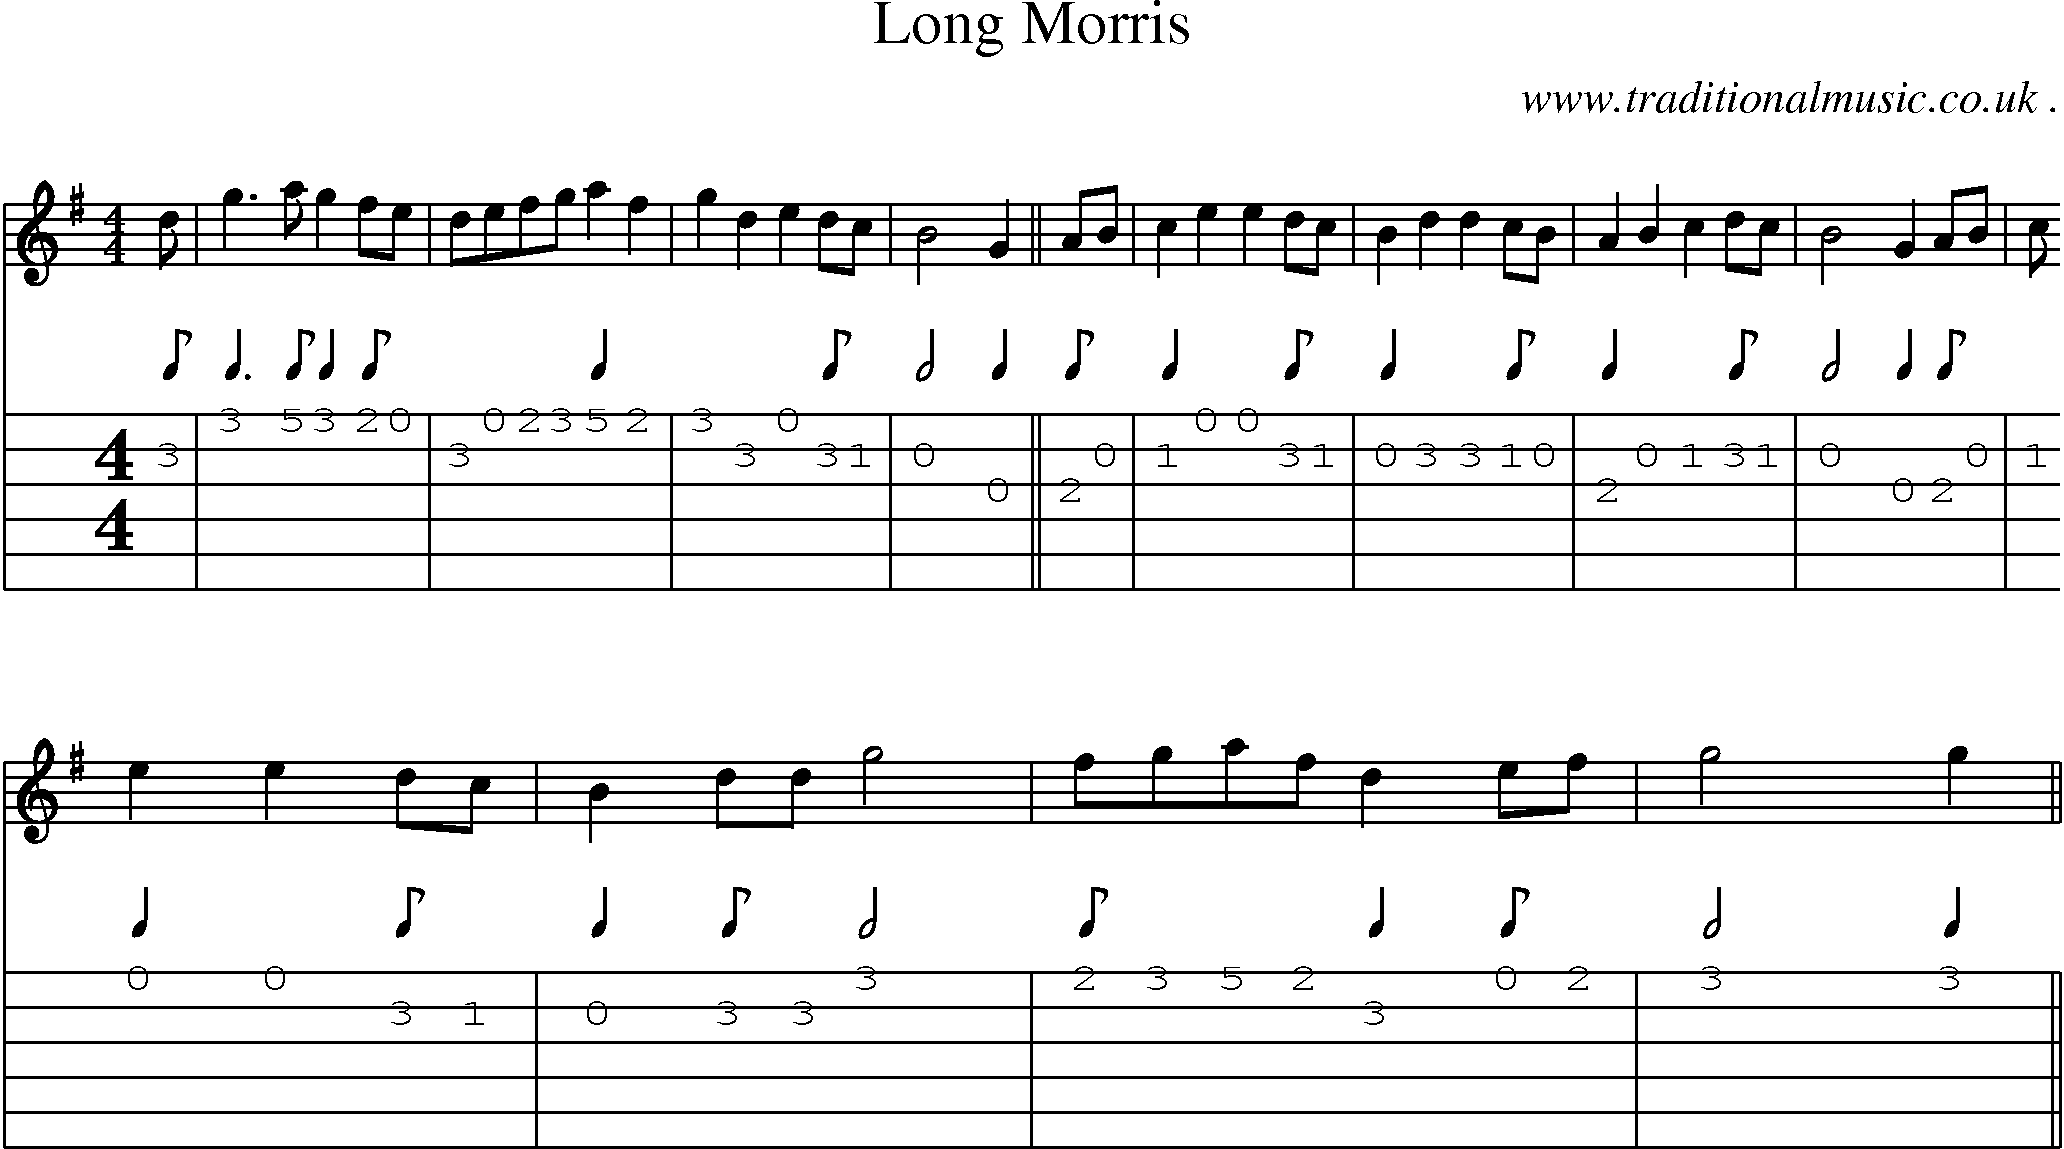 Sheet-Music and Guitar Tabs for Long Morris